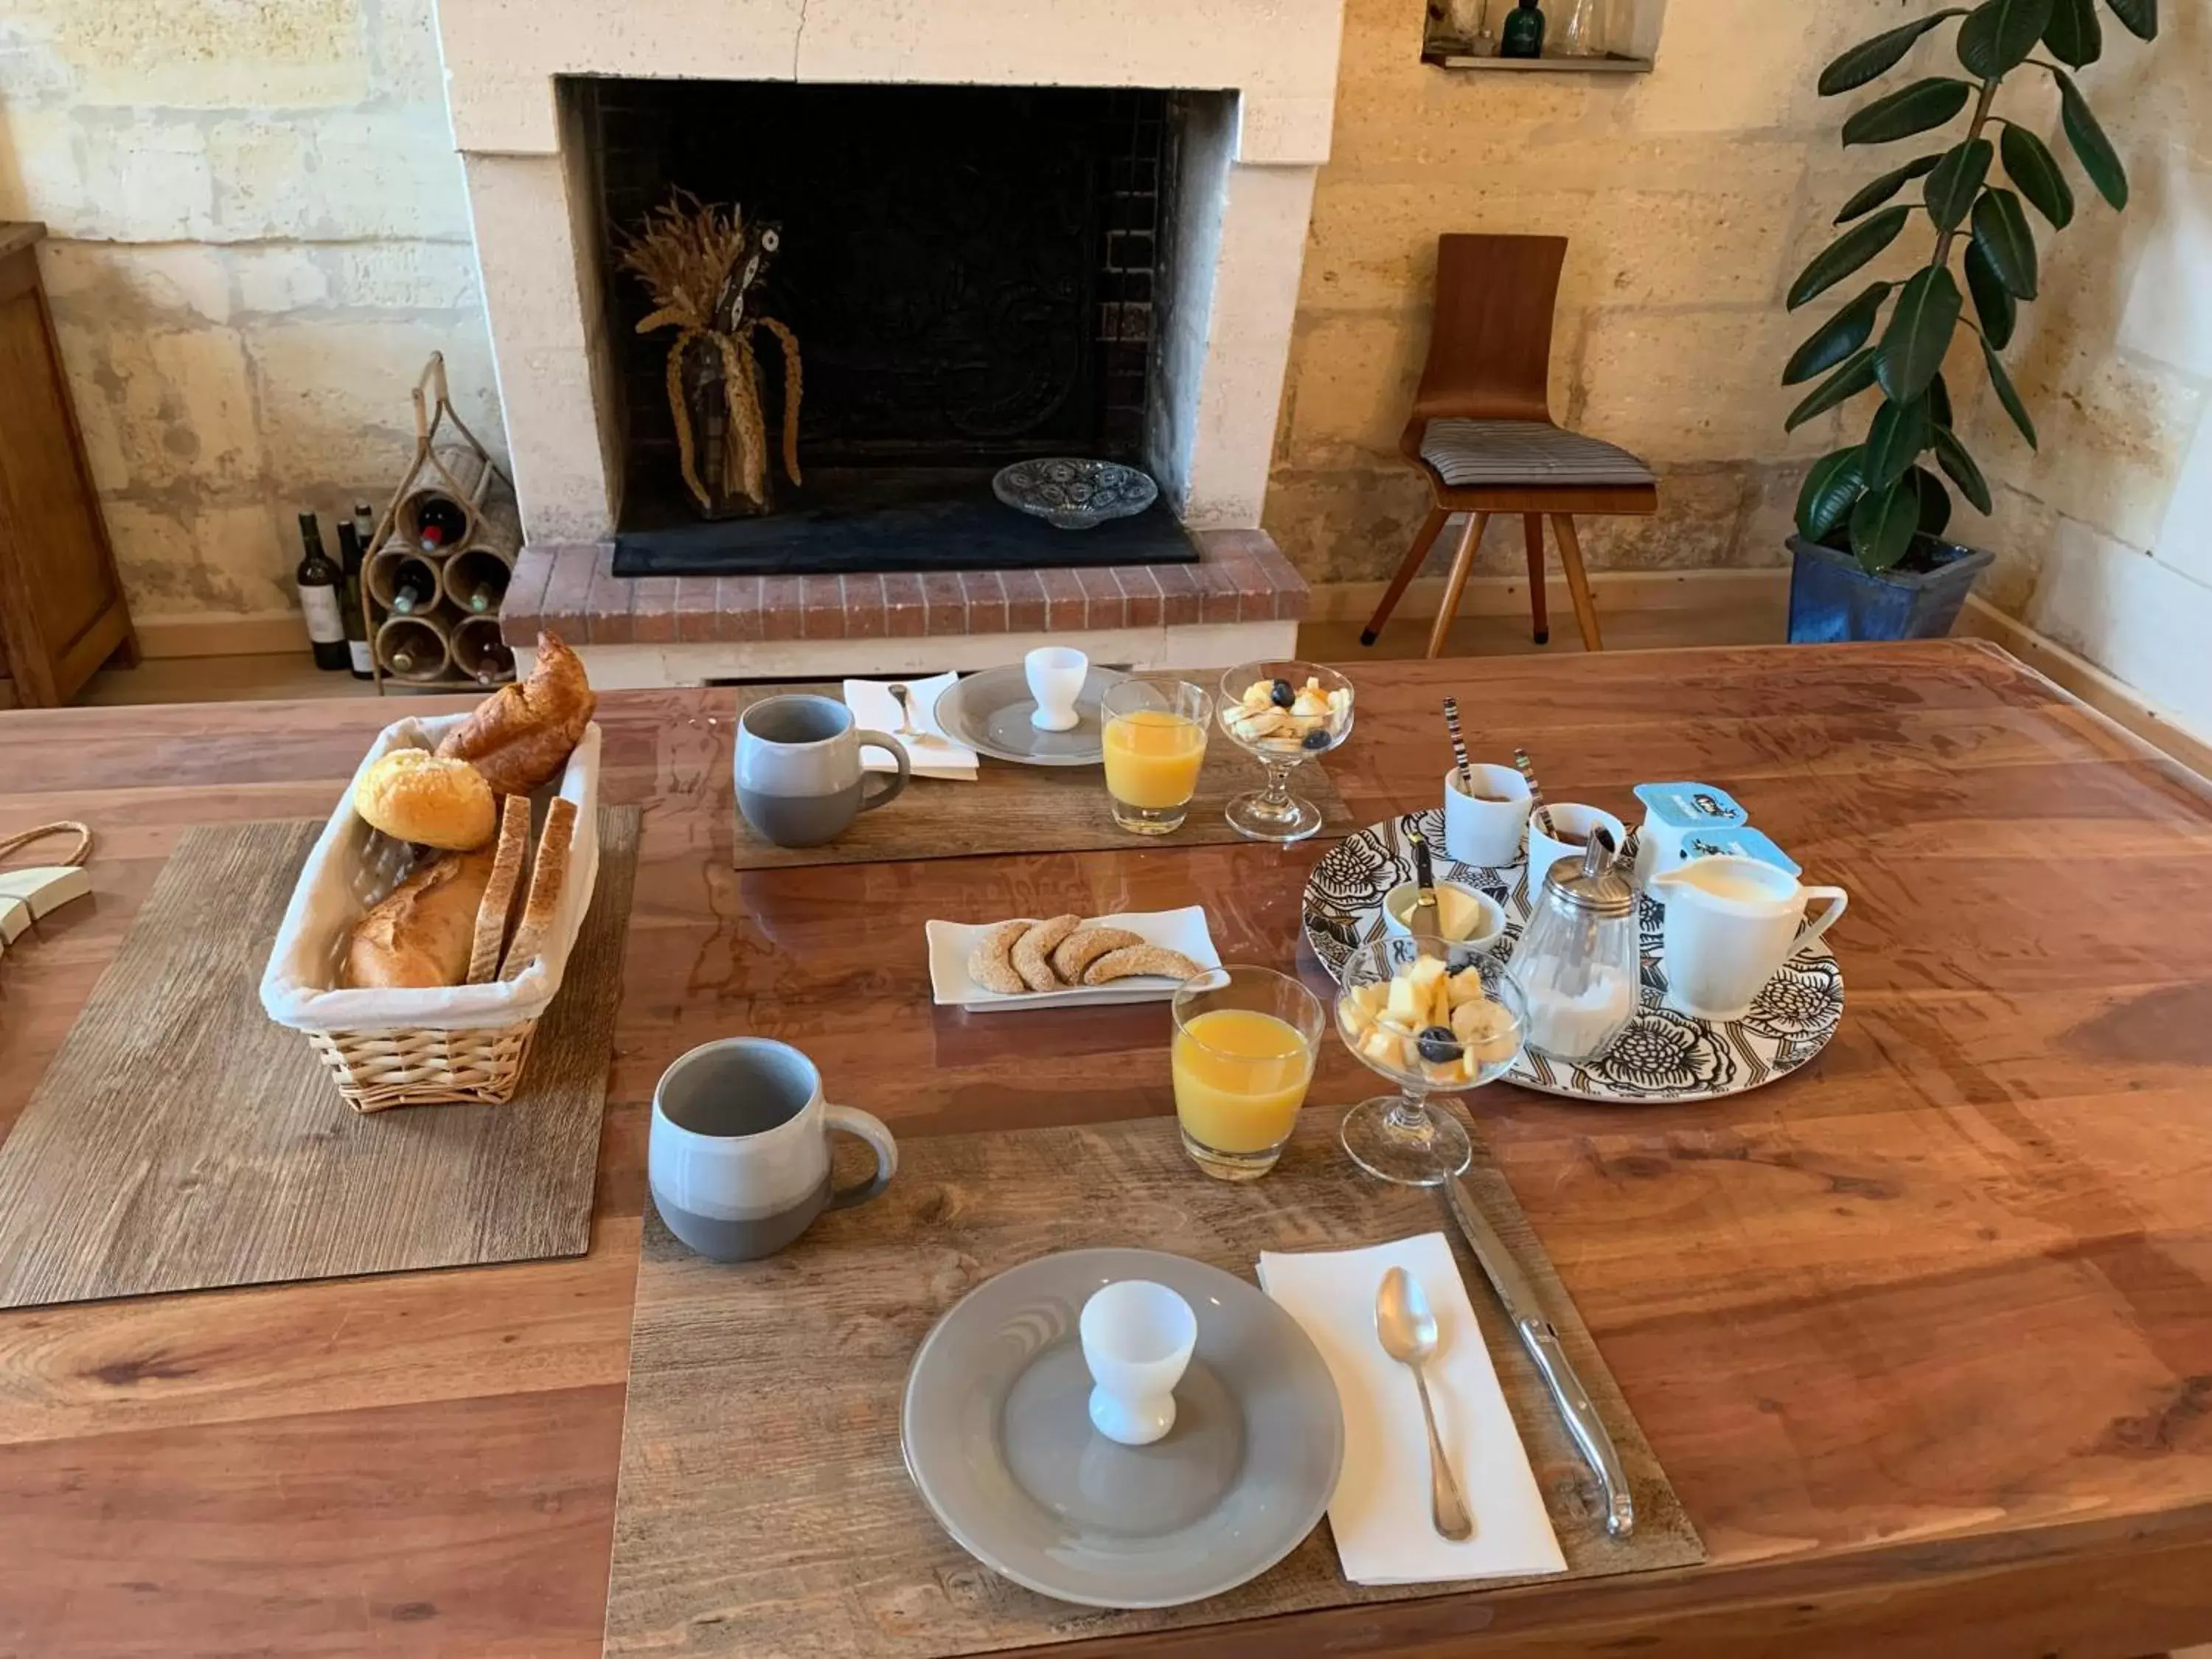 Continental breakfast, Breakfast in Suite privative Abella - Aile de maison bourgeoise